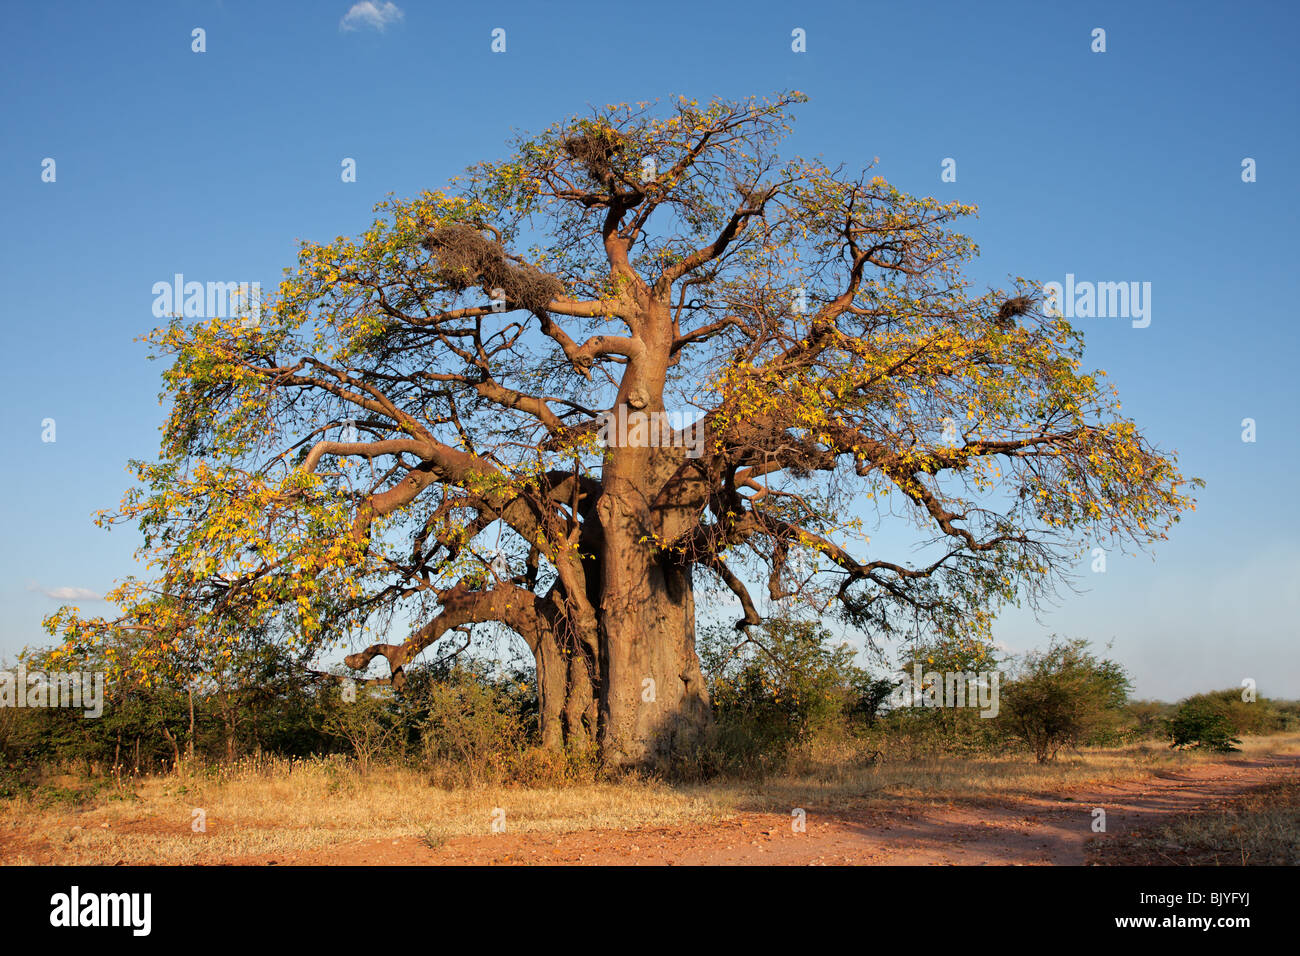 African baobab tree (Adansonia digitata), southern Africa Stock Photo